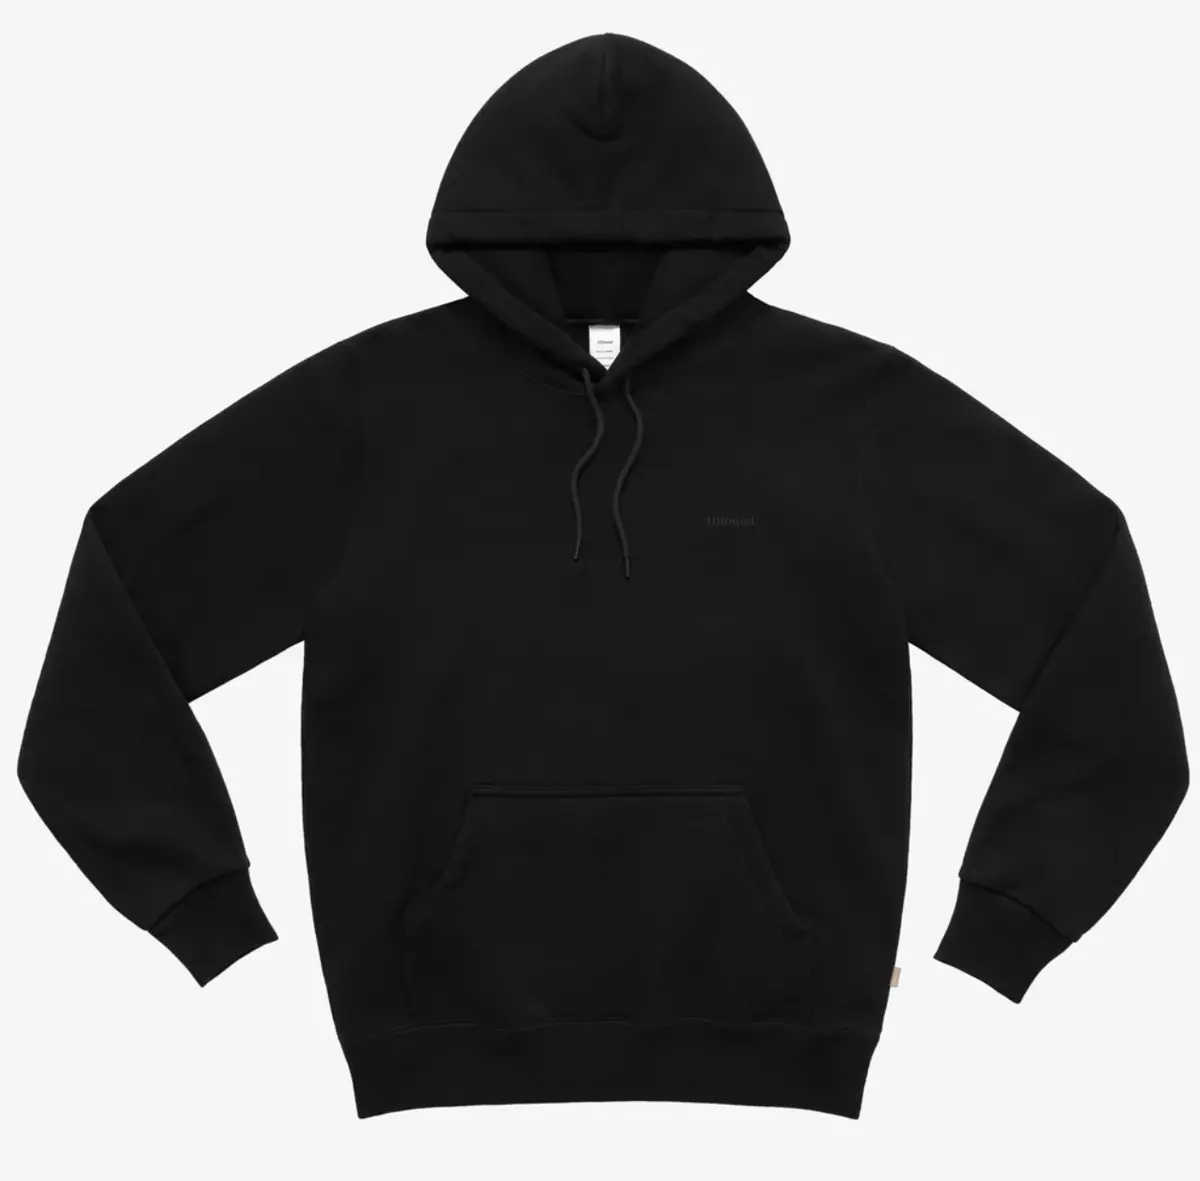 jjjjound J/90 Black Hoodie men's pullover size Medium | eBay